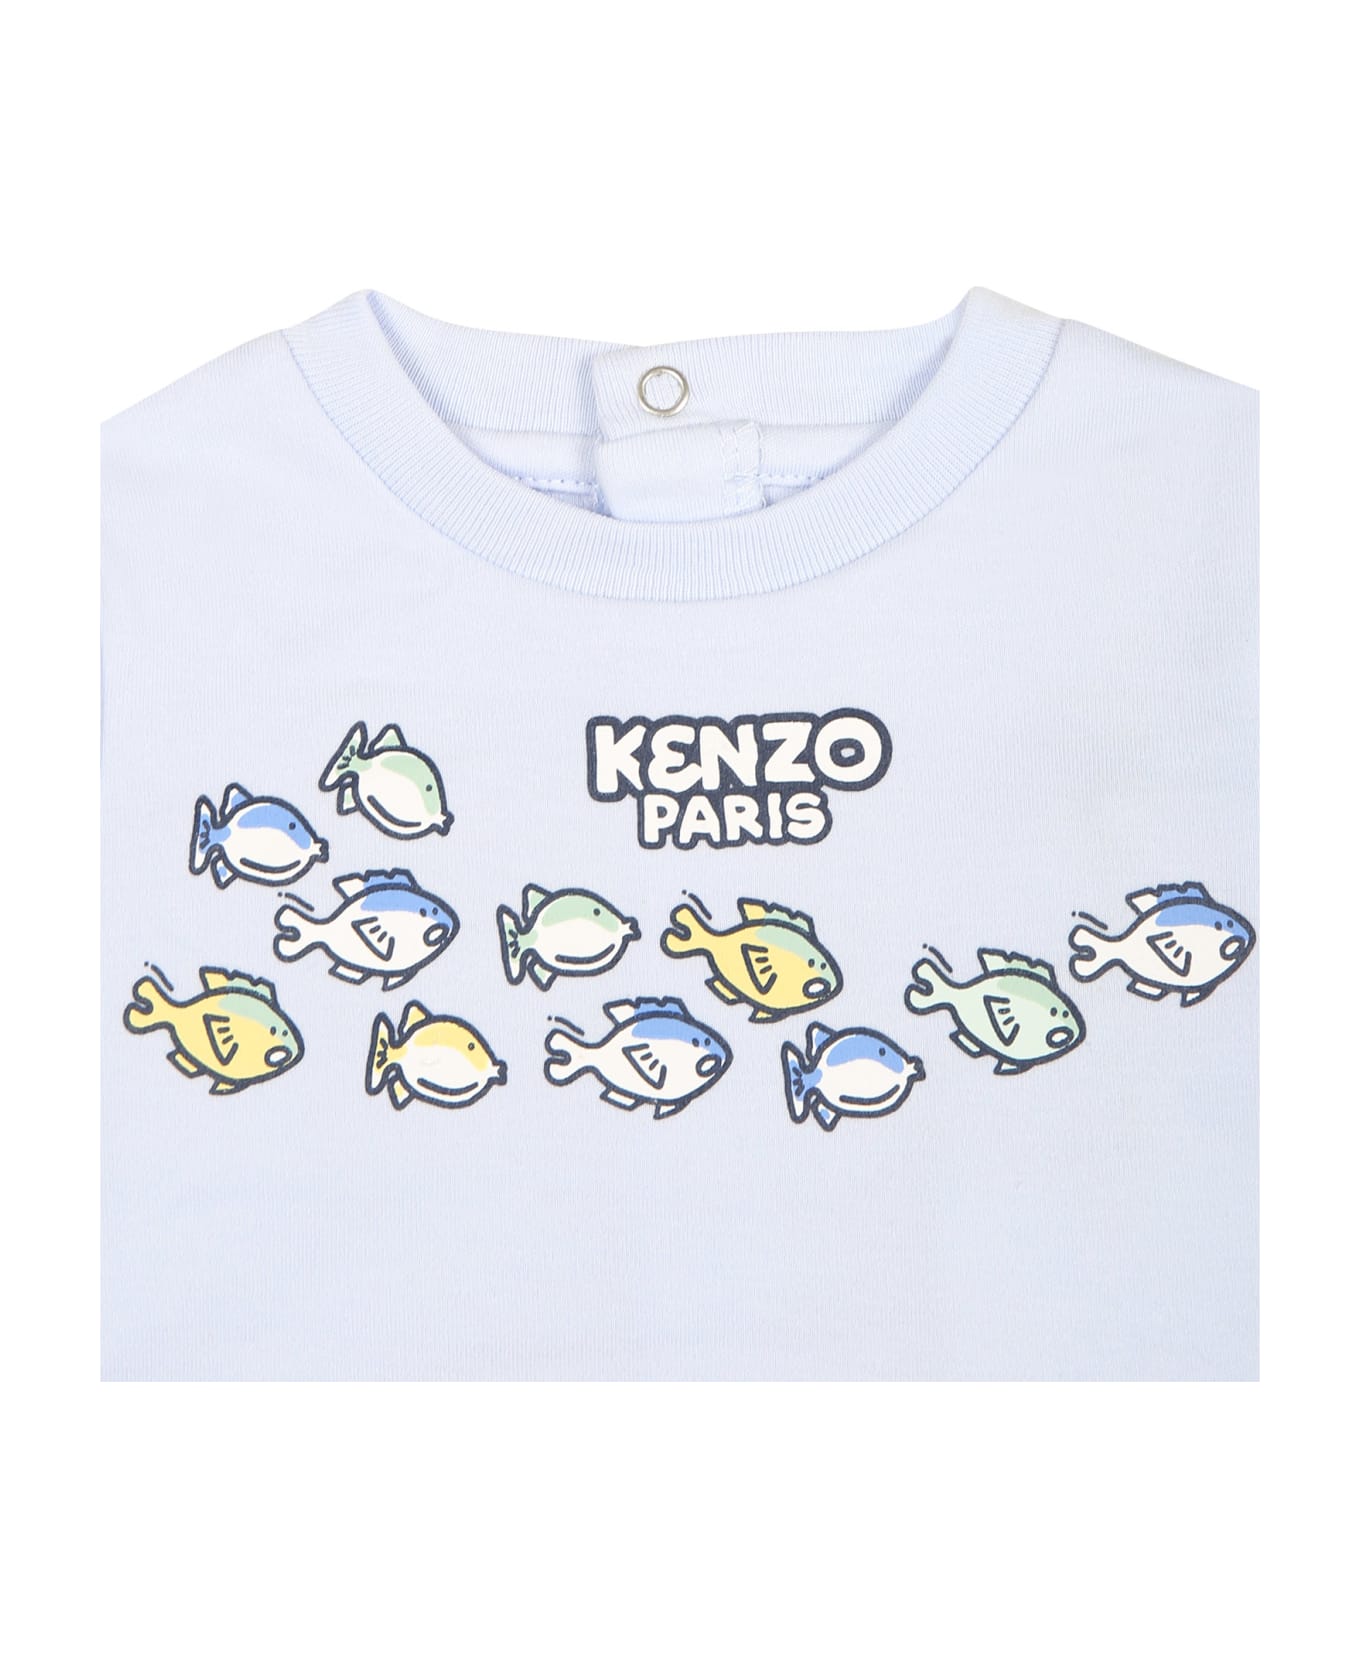 Kenzo Kids Light Blue Babygrow For Baby Boy With Print - Light Blue